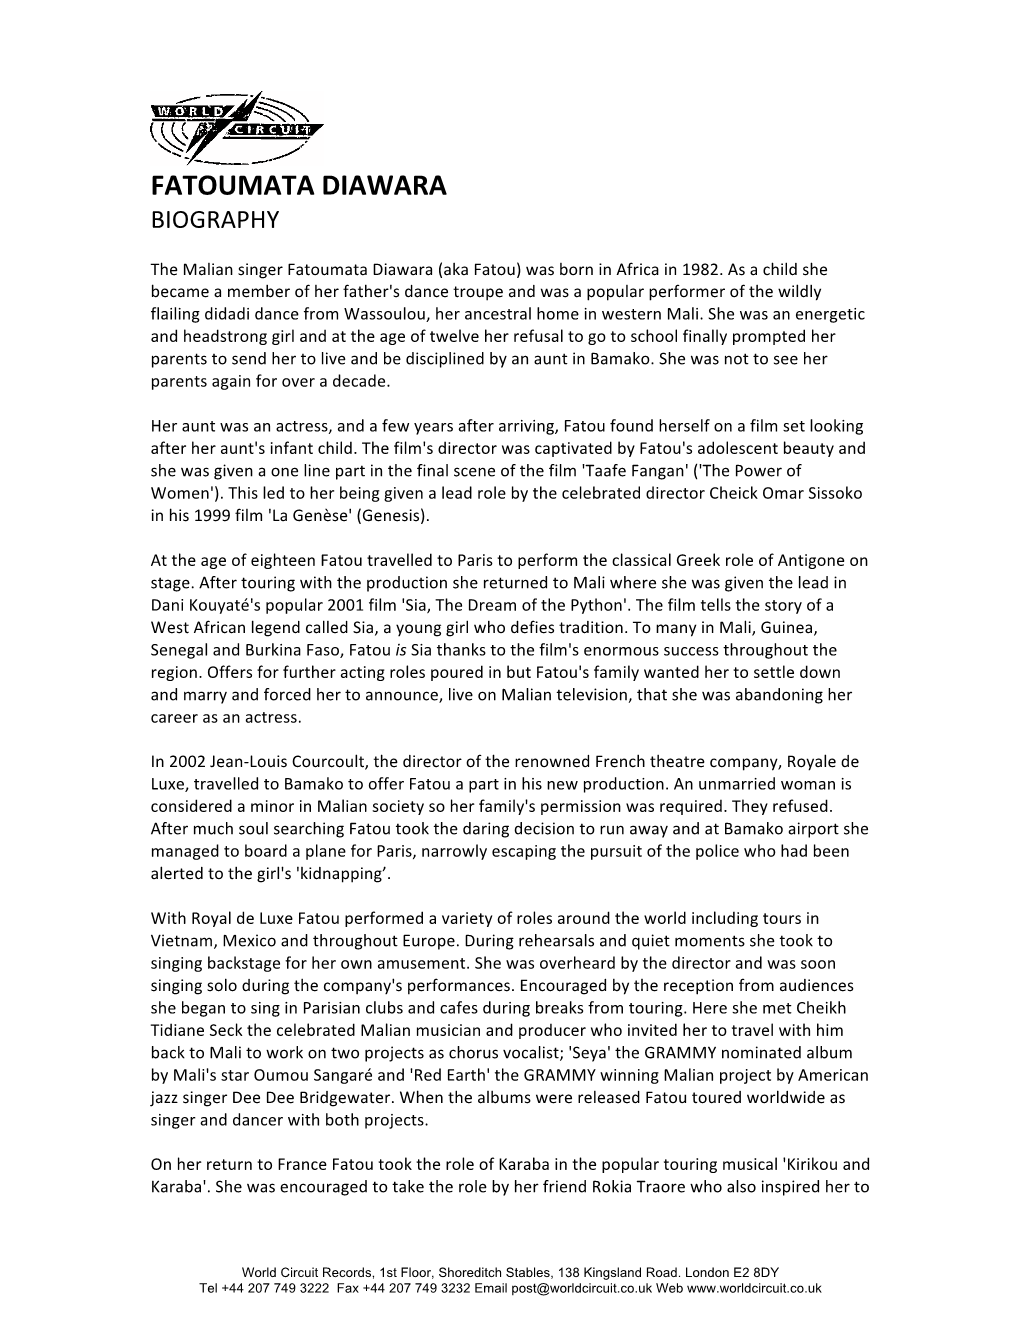 Fatoumata Diawara Biography